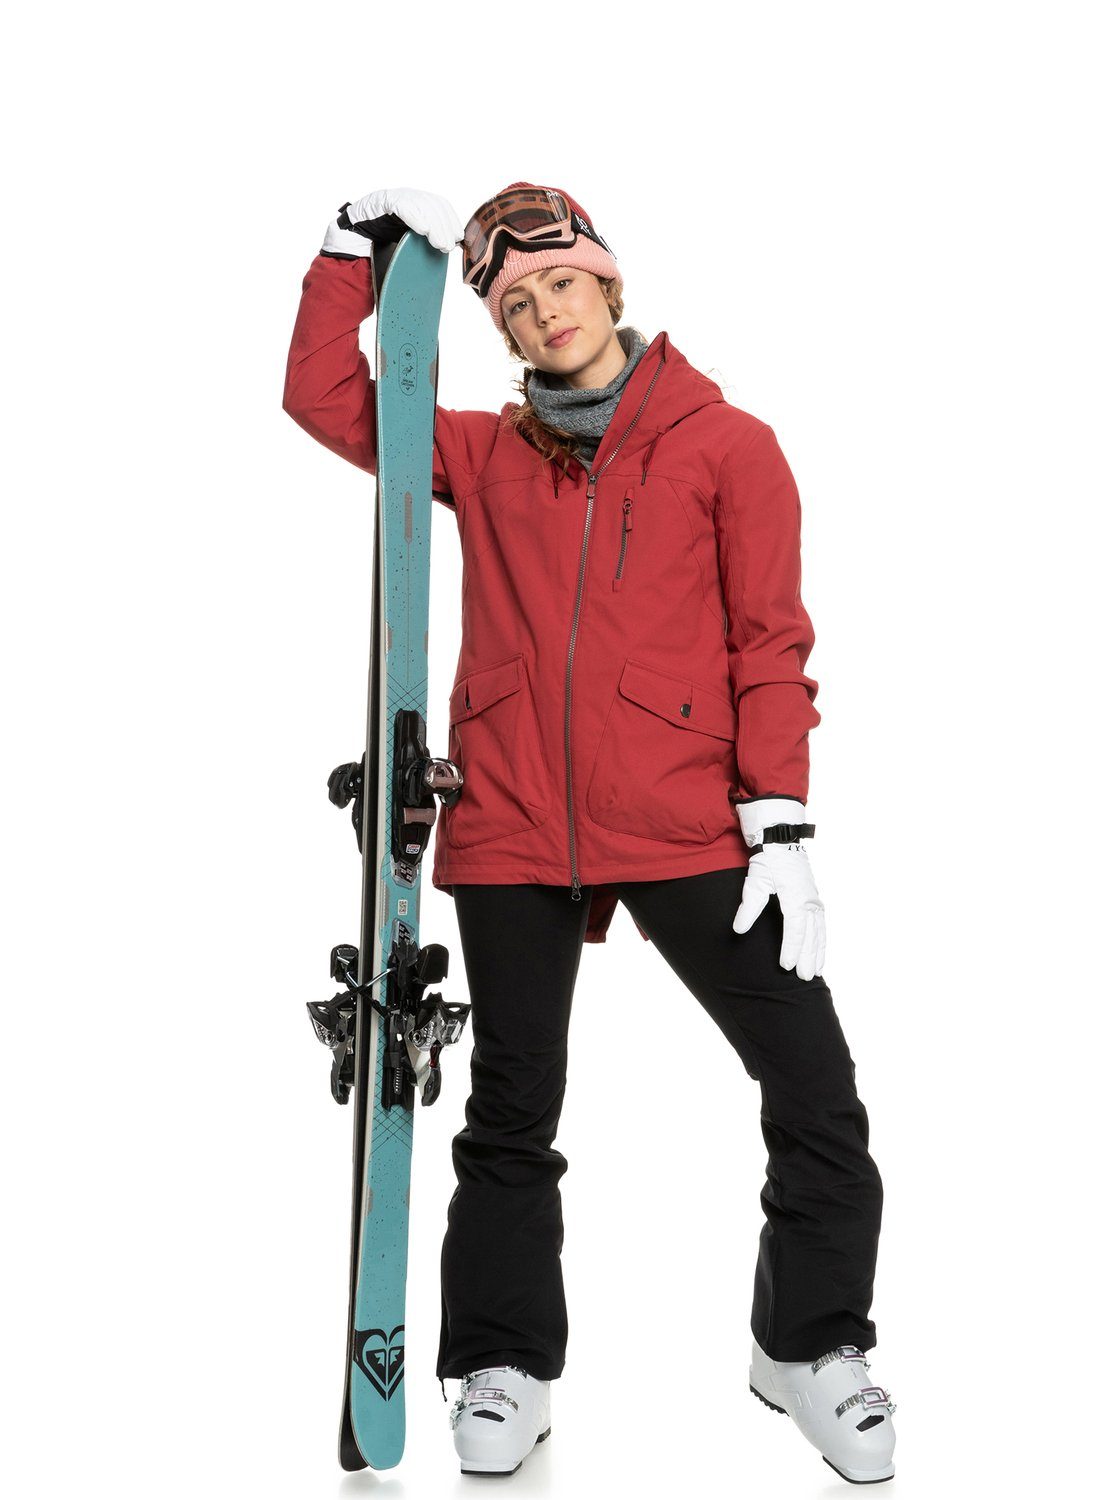 Roxy Bright ROXY Jetty White Snowboardhandschuhe